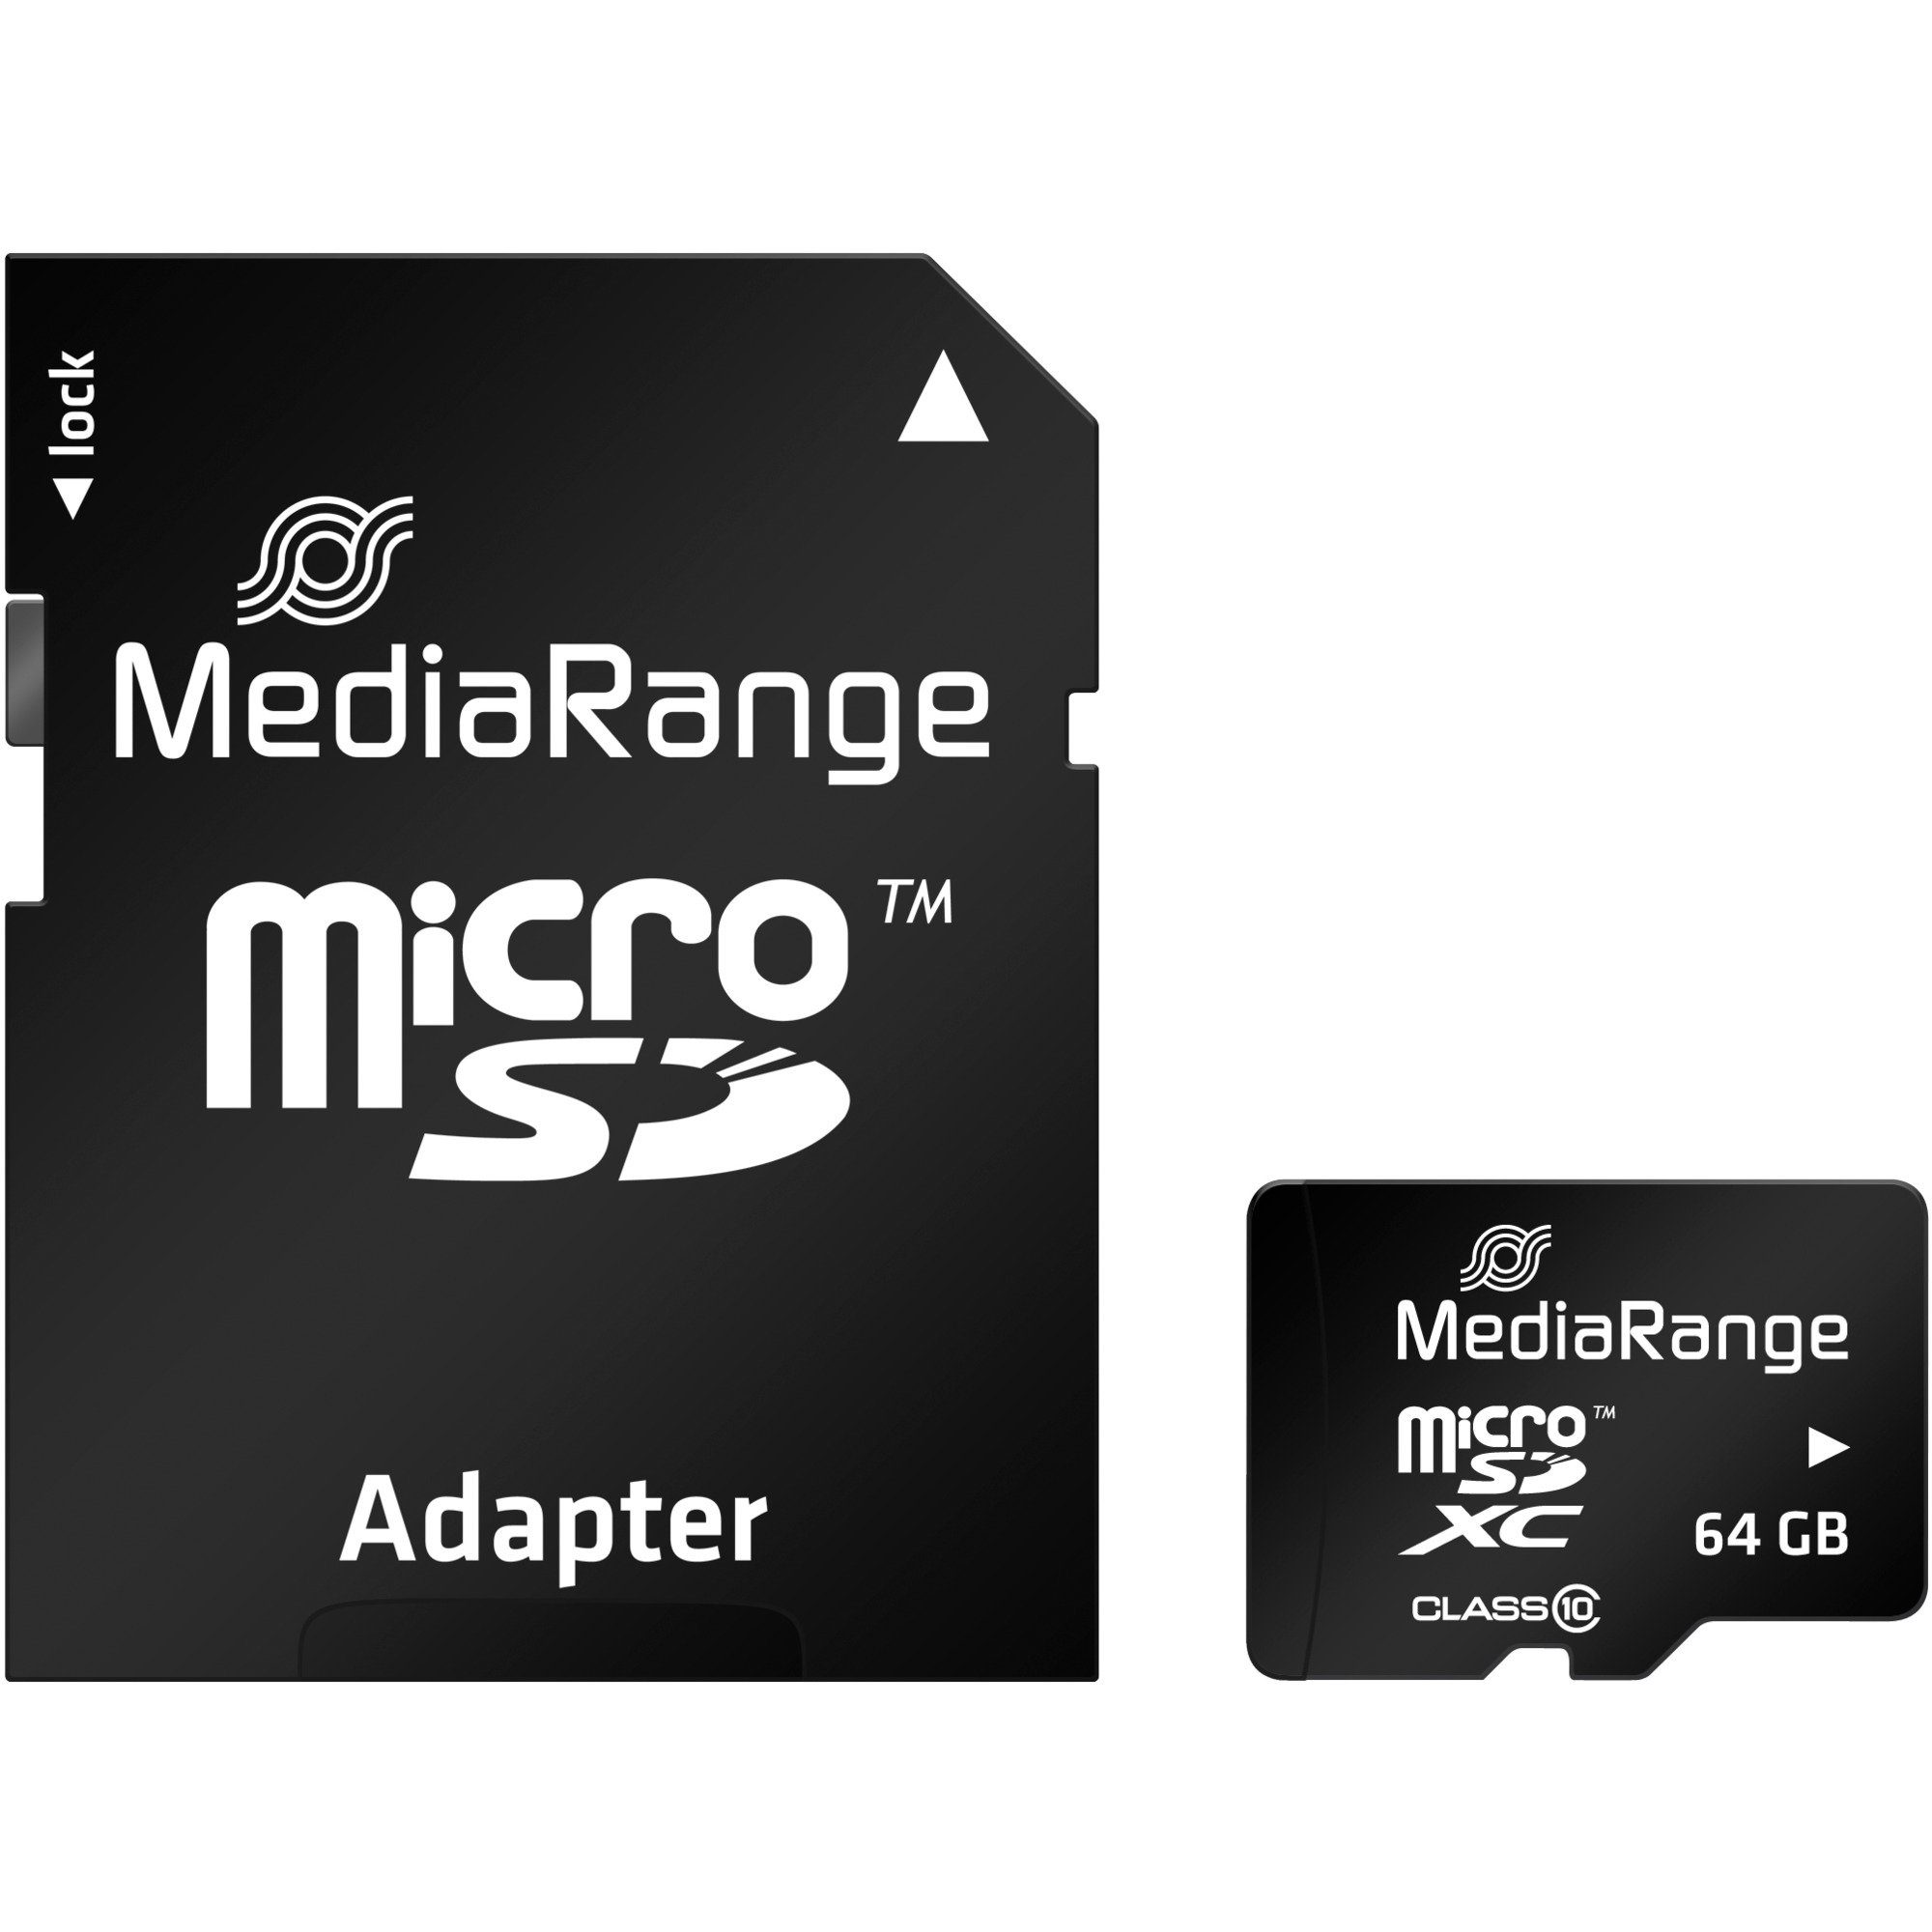 Mediarange 64 GB microSDXC Speicherkarte (64 GB GB)